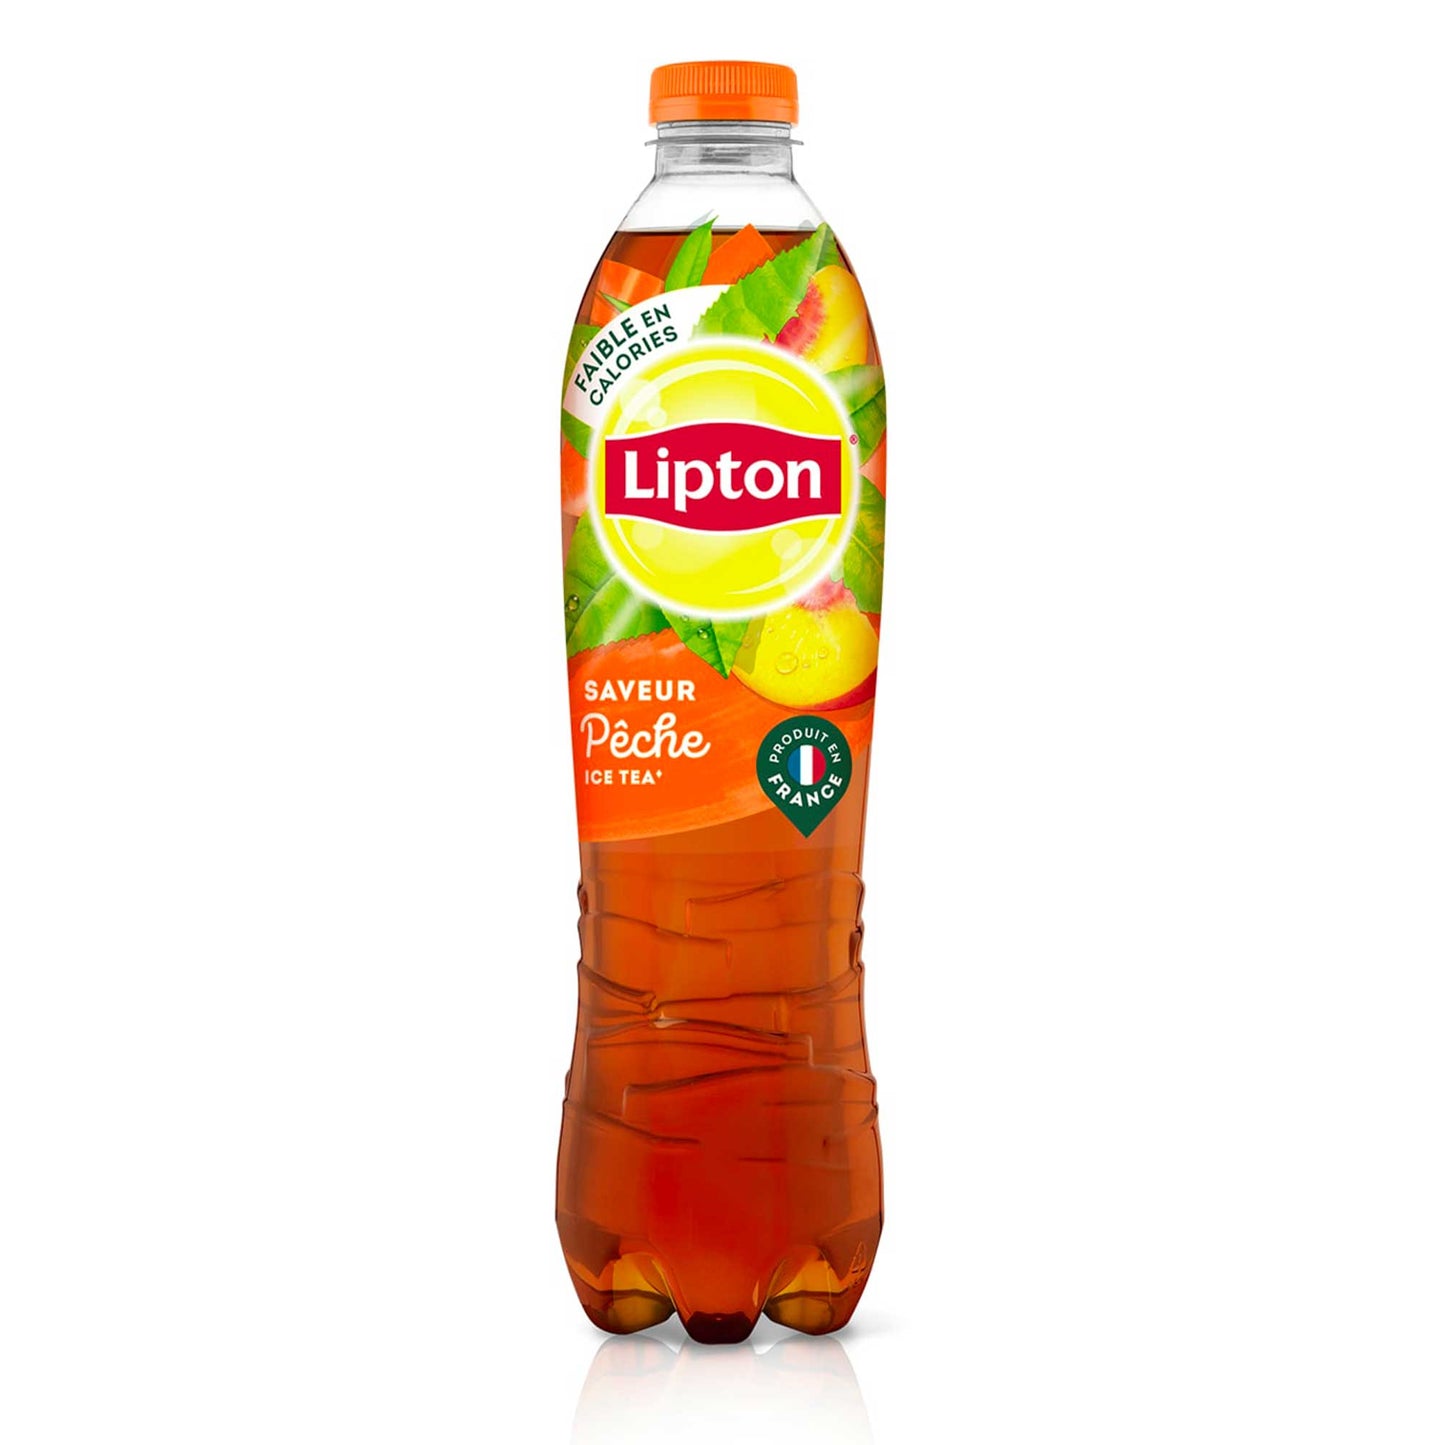 Lipton Ice Tea pêche - 1,5L